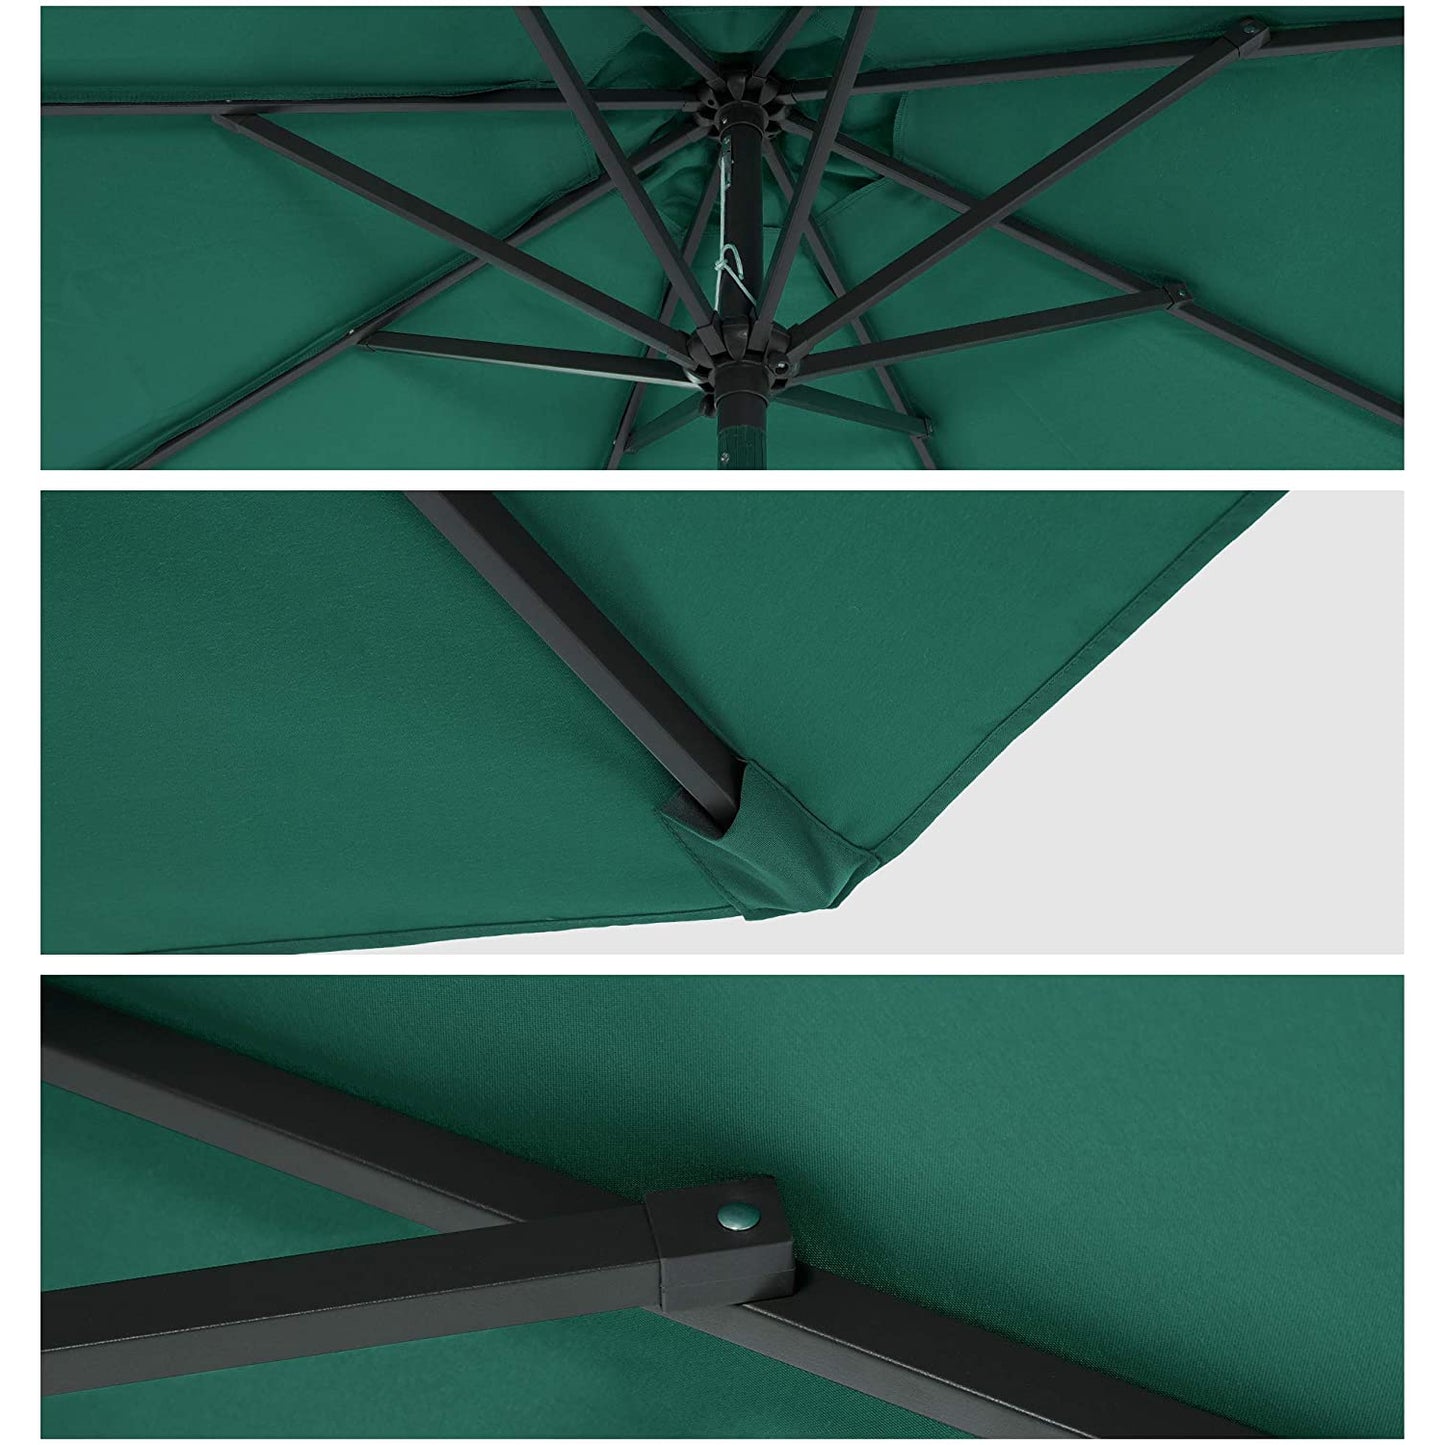 Nancy's Fordyce Parasol - Sun protection - Octagonal - Collapsible - Green - Ø 300 cm